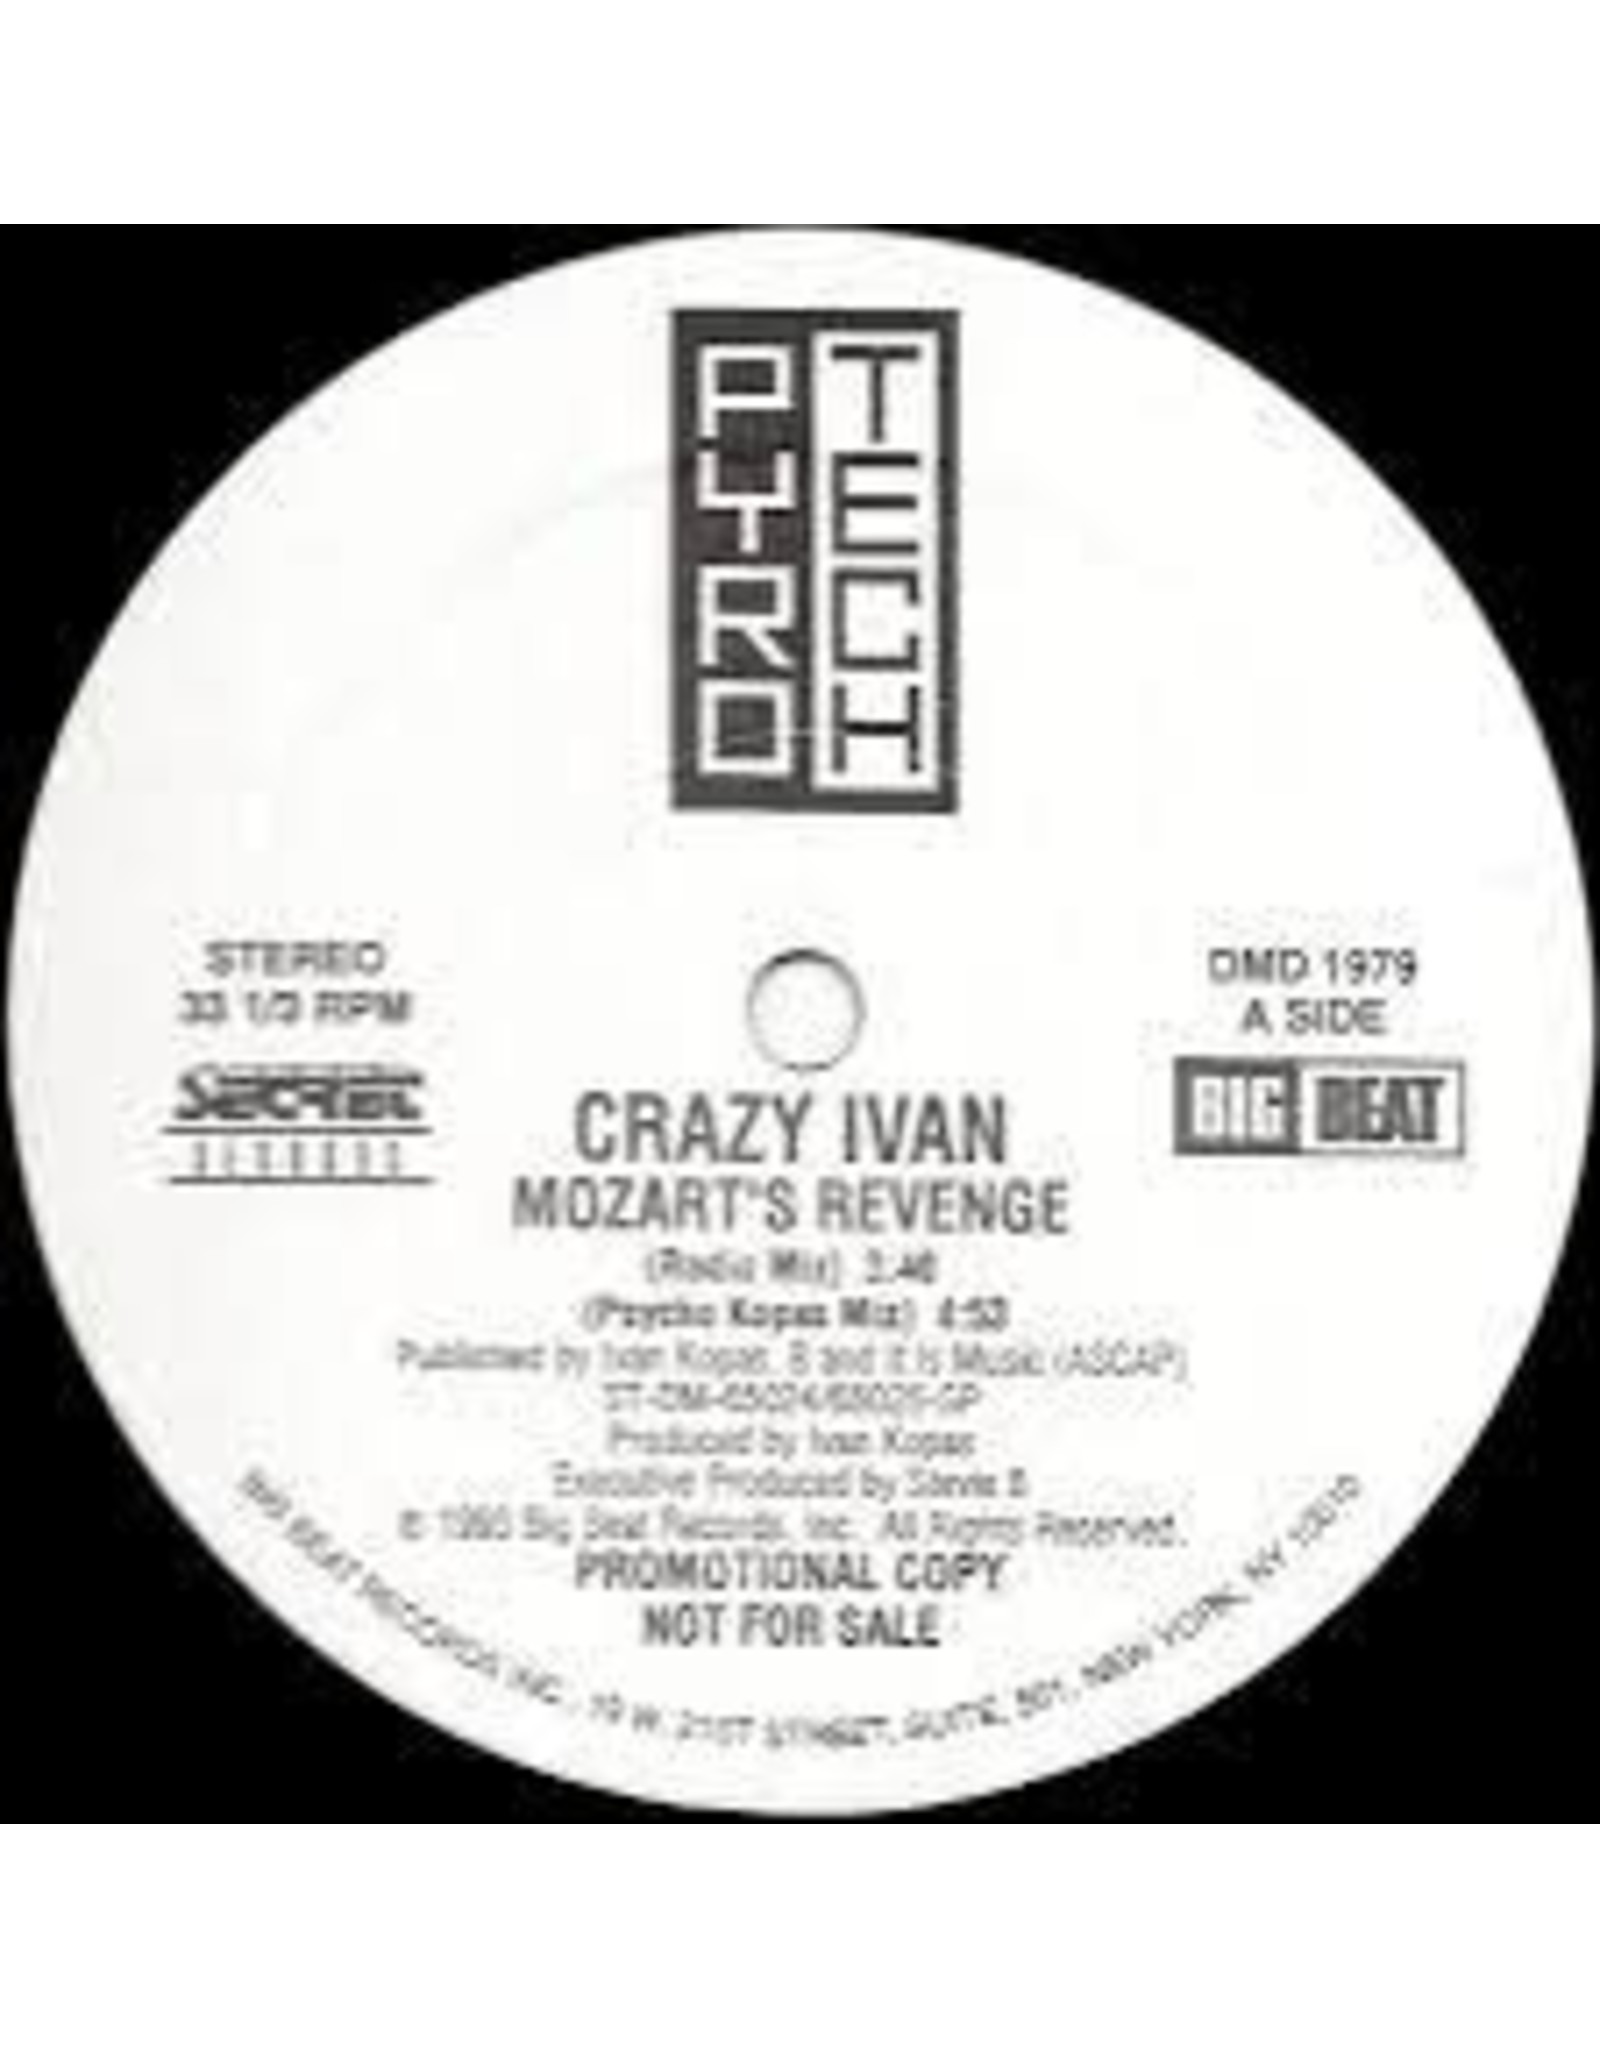 Crazy Ivan / Mozart's Revenge 12" Single